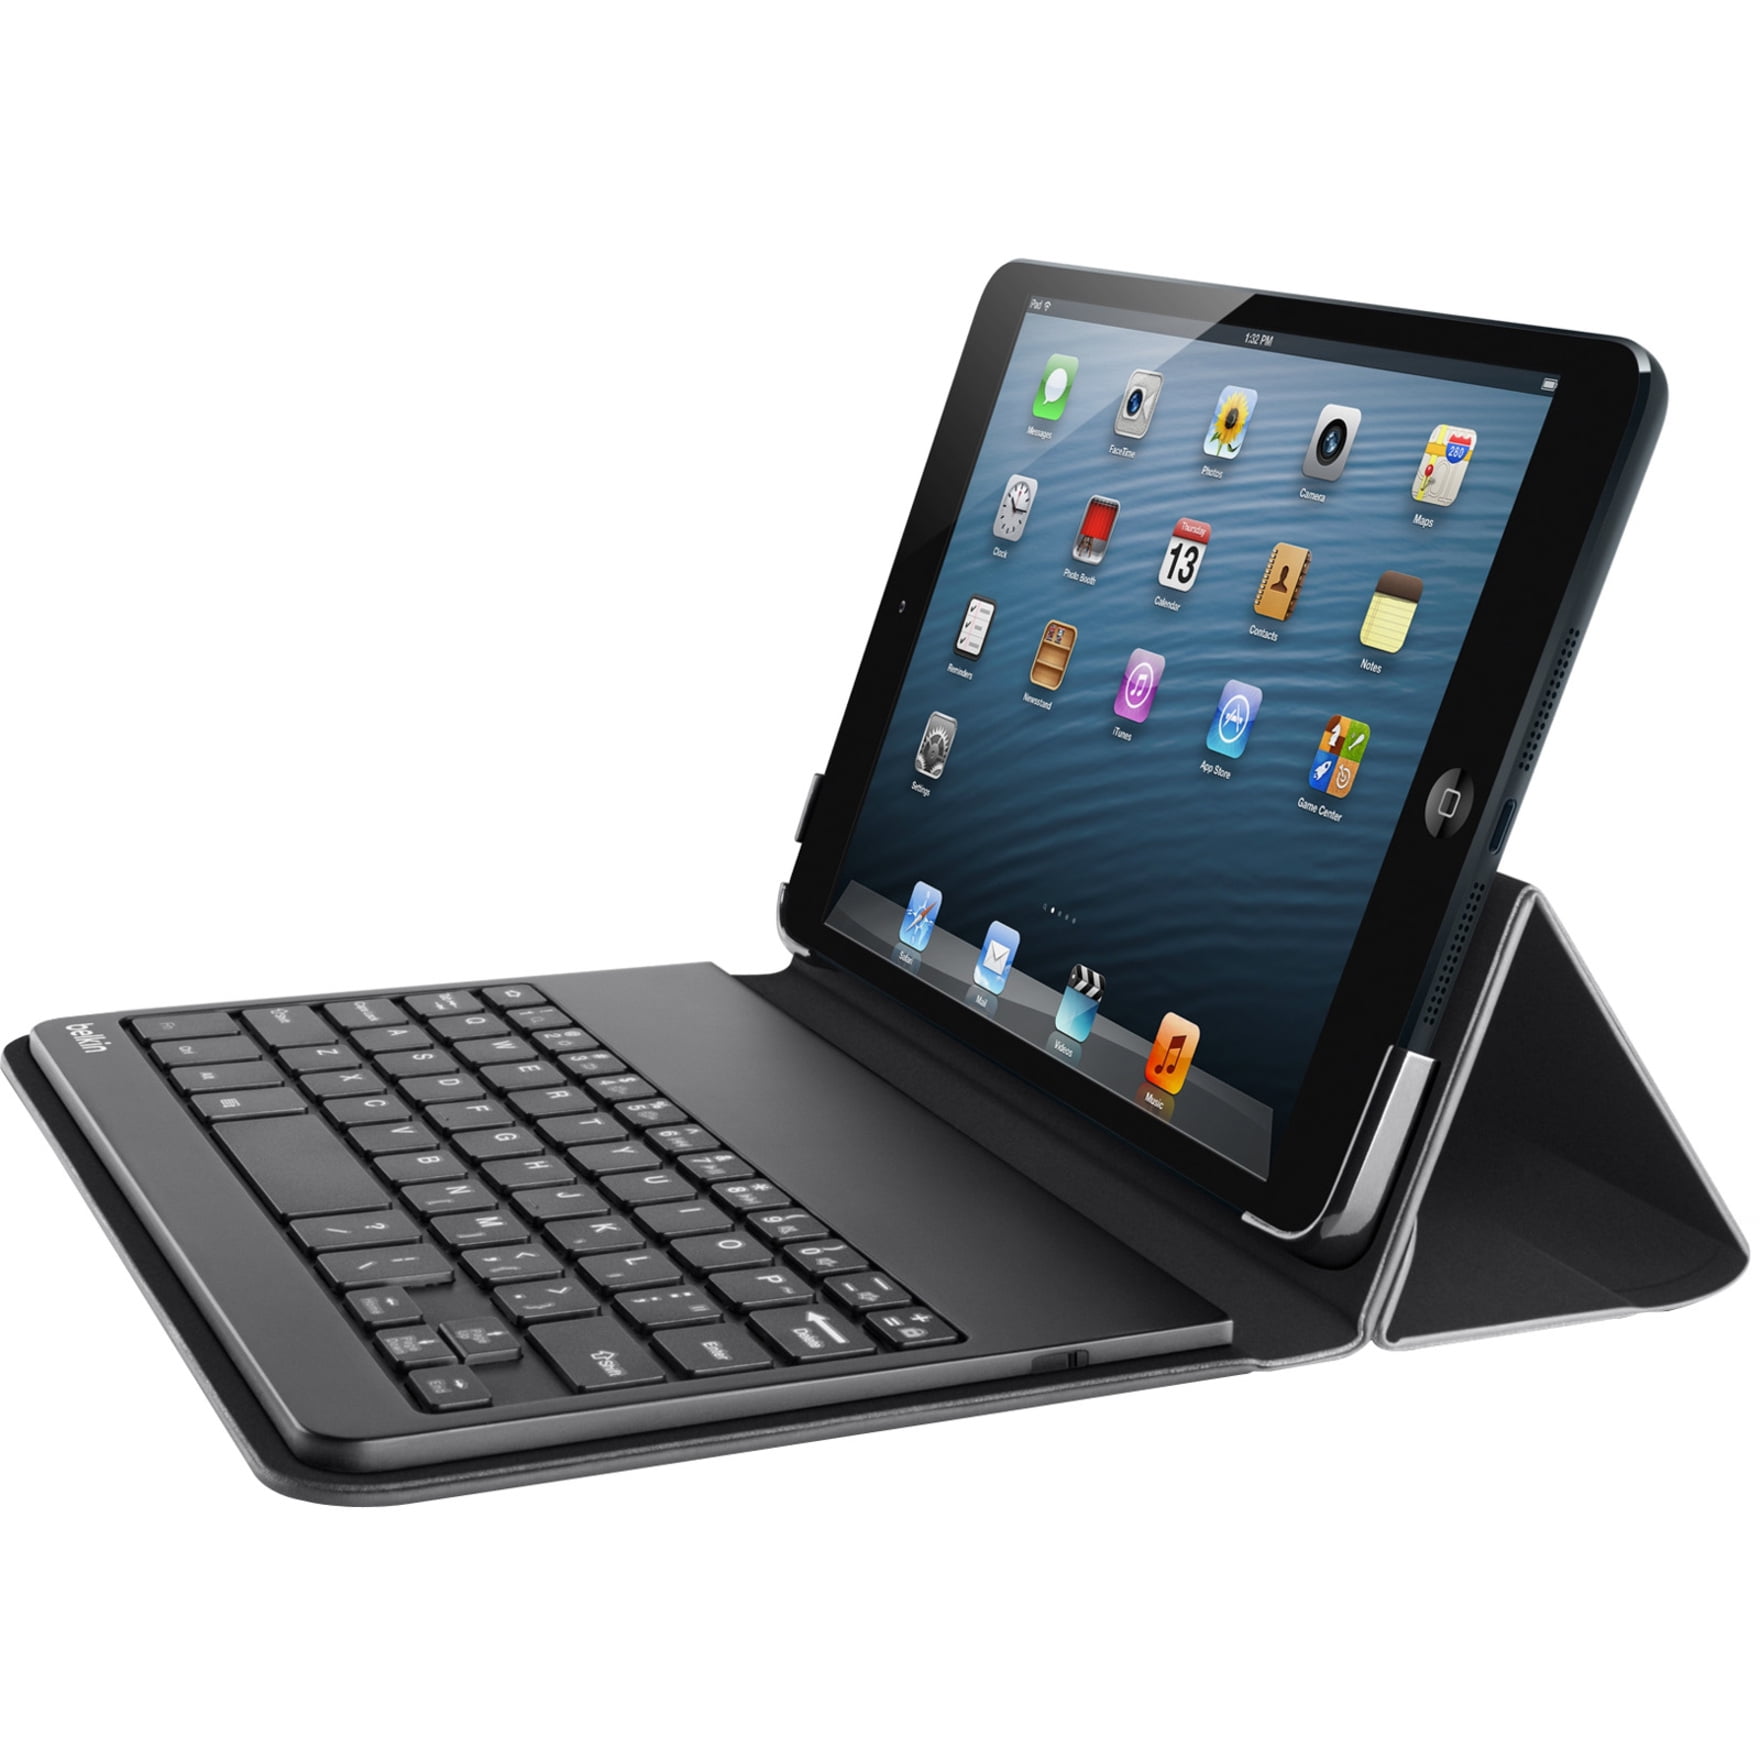 tre Dejlig Beregning Belkin Keyboard/Cover Case for 7" Apple iPad mini Tablet, Black -  Walmart.com